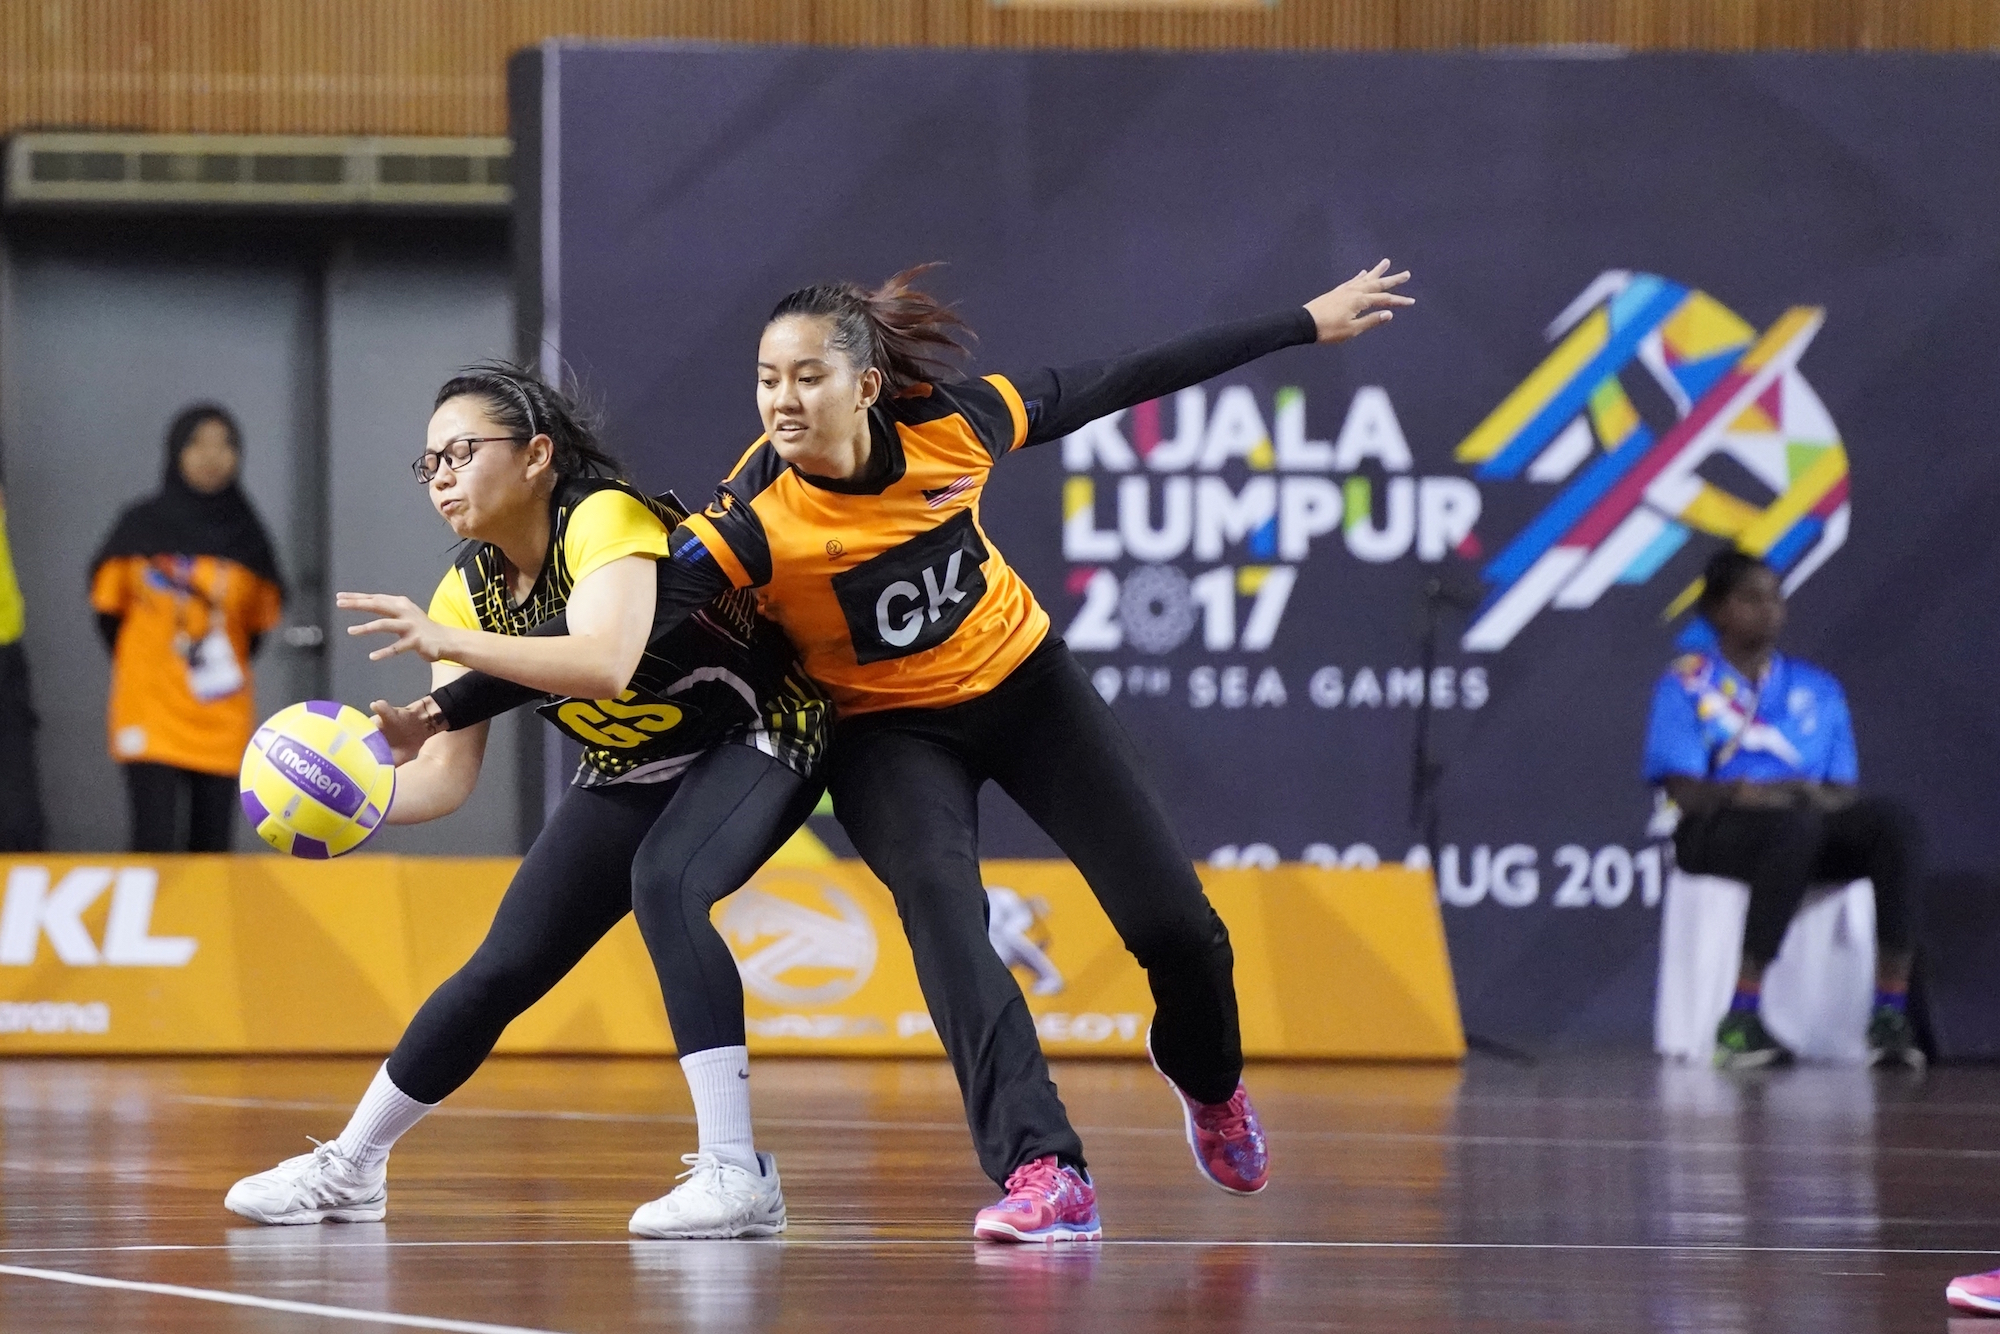 Netball semifinal match between Malaysia and Brunei at Juara Stadium Bukit Kiara during 29th SEA Games Kuala Lumpur 2017 on 19 August 2017. Photo by Azli Wahab | MASOC.